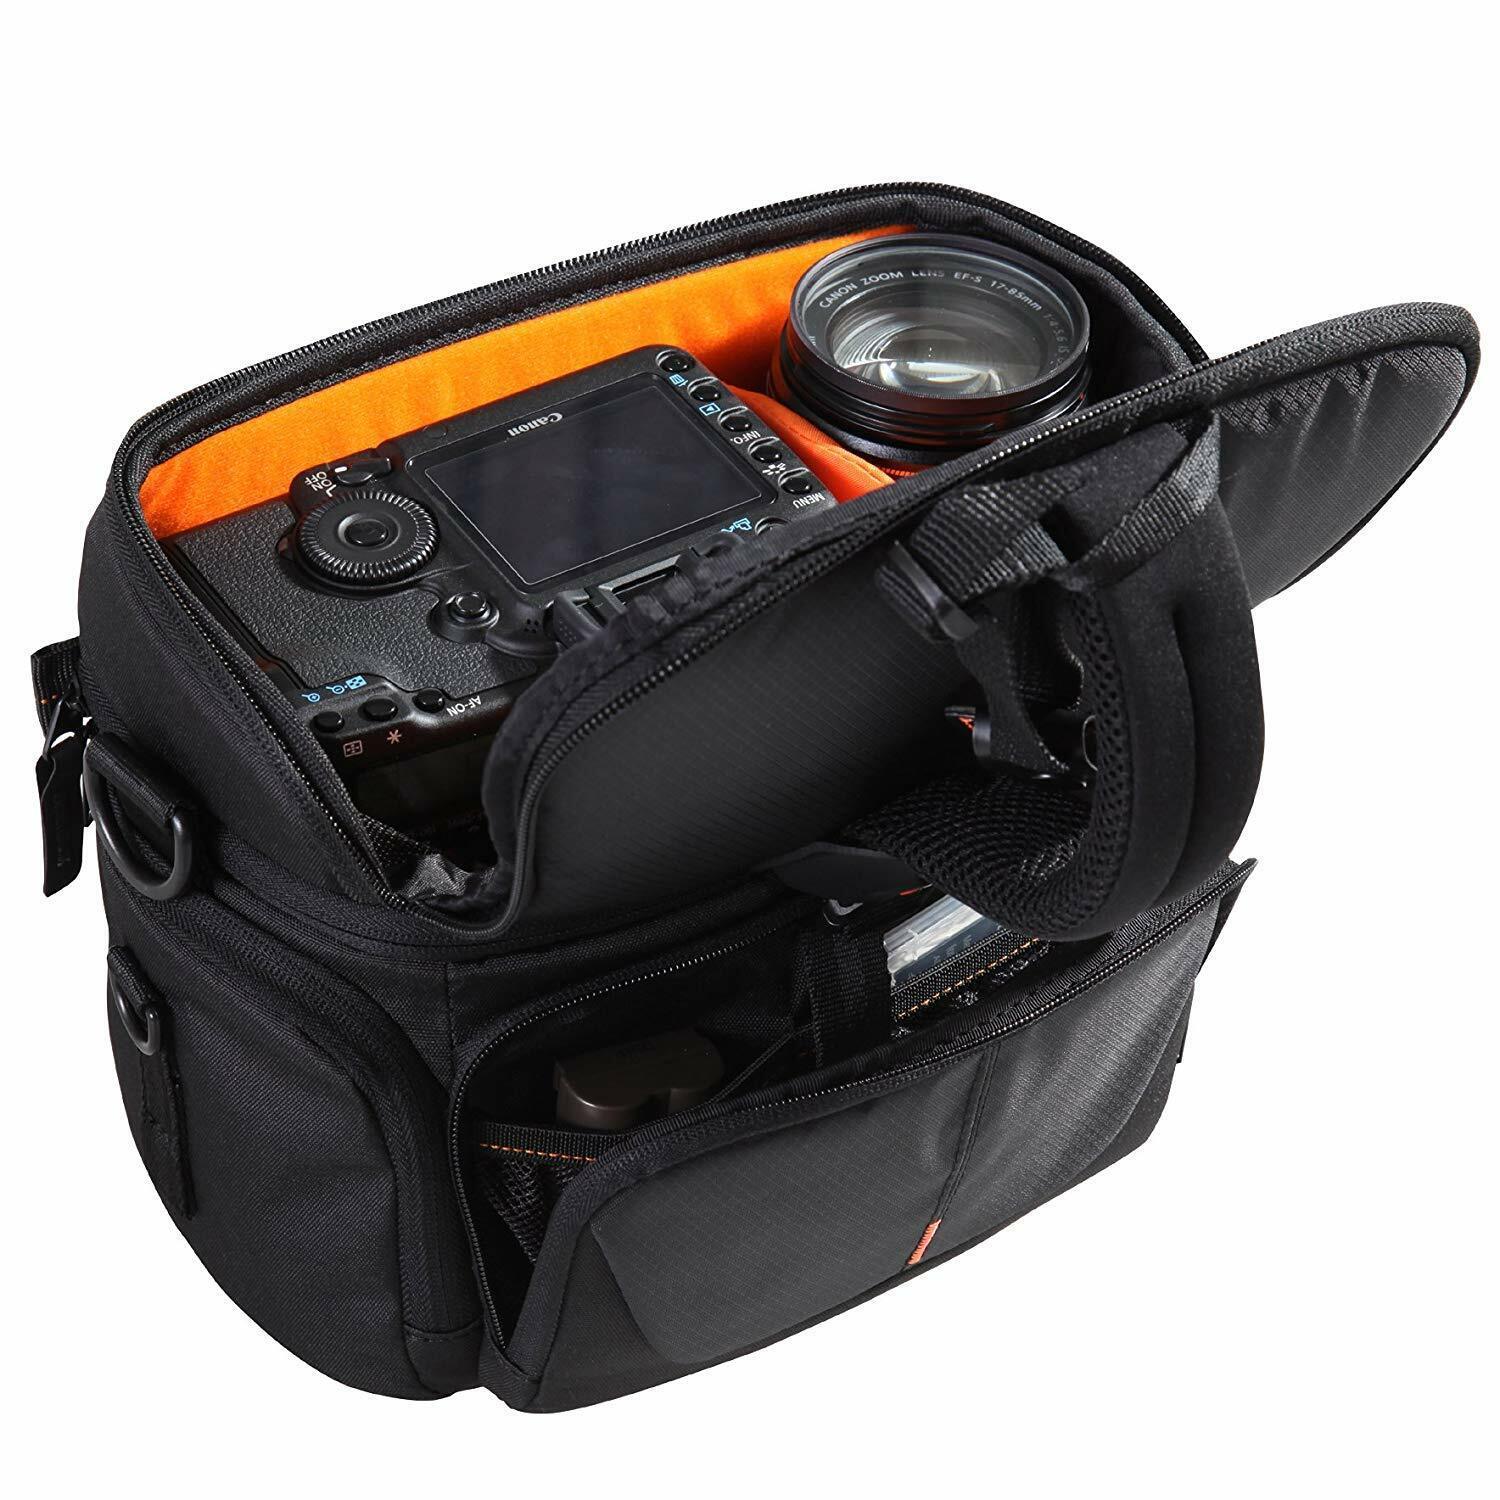 Vanguard Up-rise 18 Zoom Expandable Camera Bag Weatherproof Rain Cover (Black) - $24.74